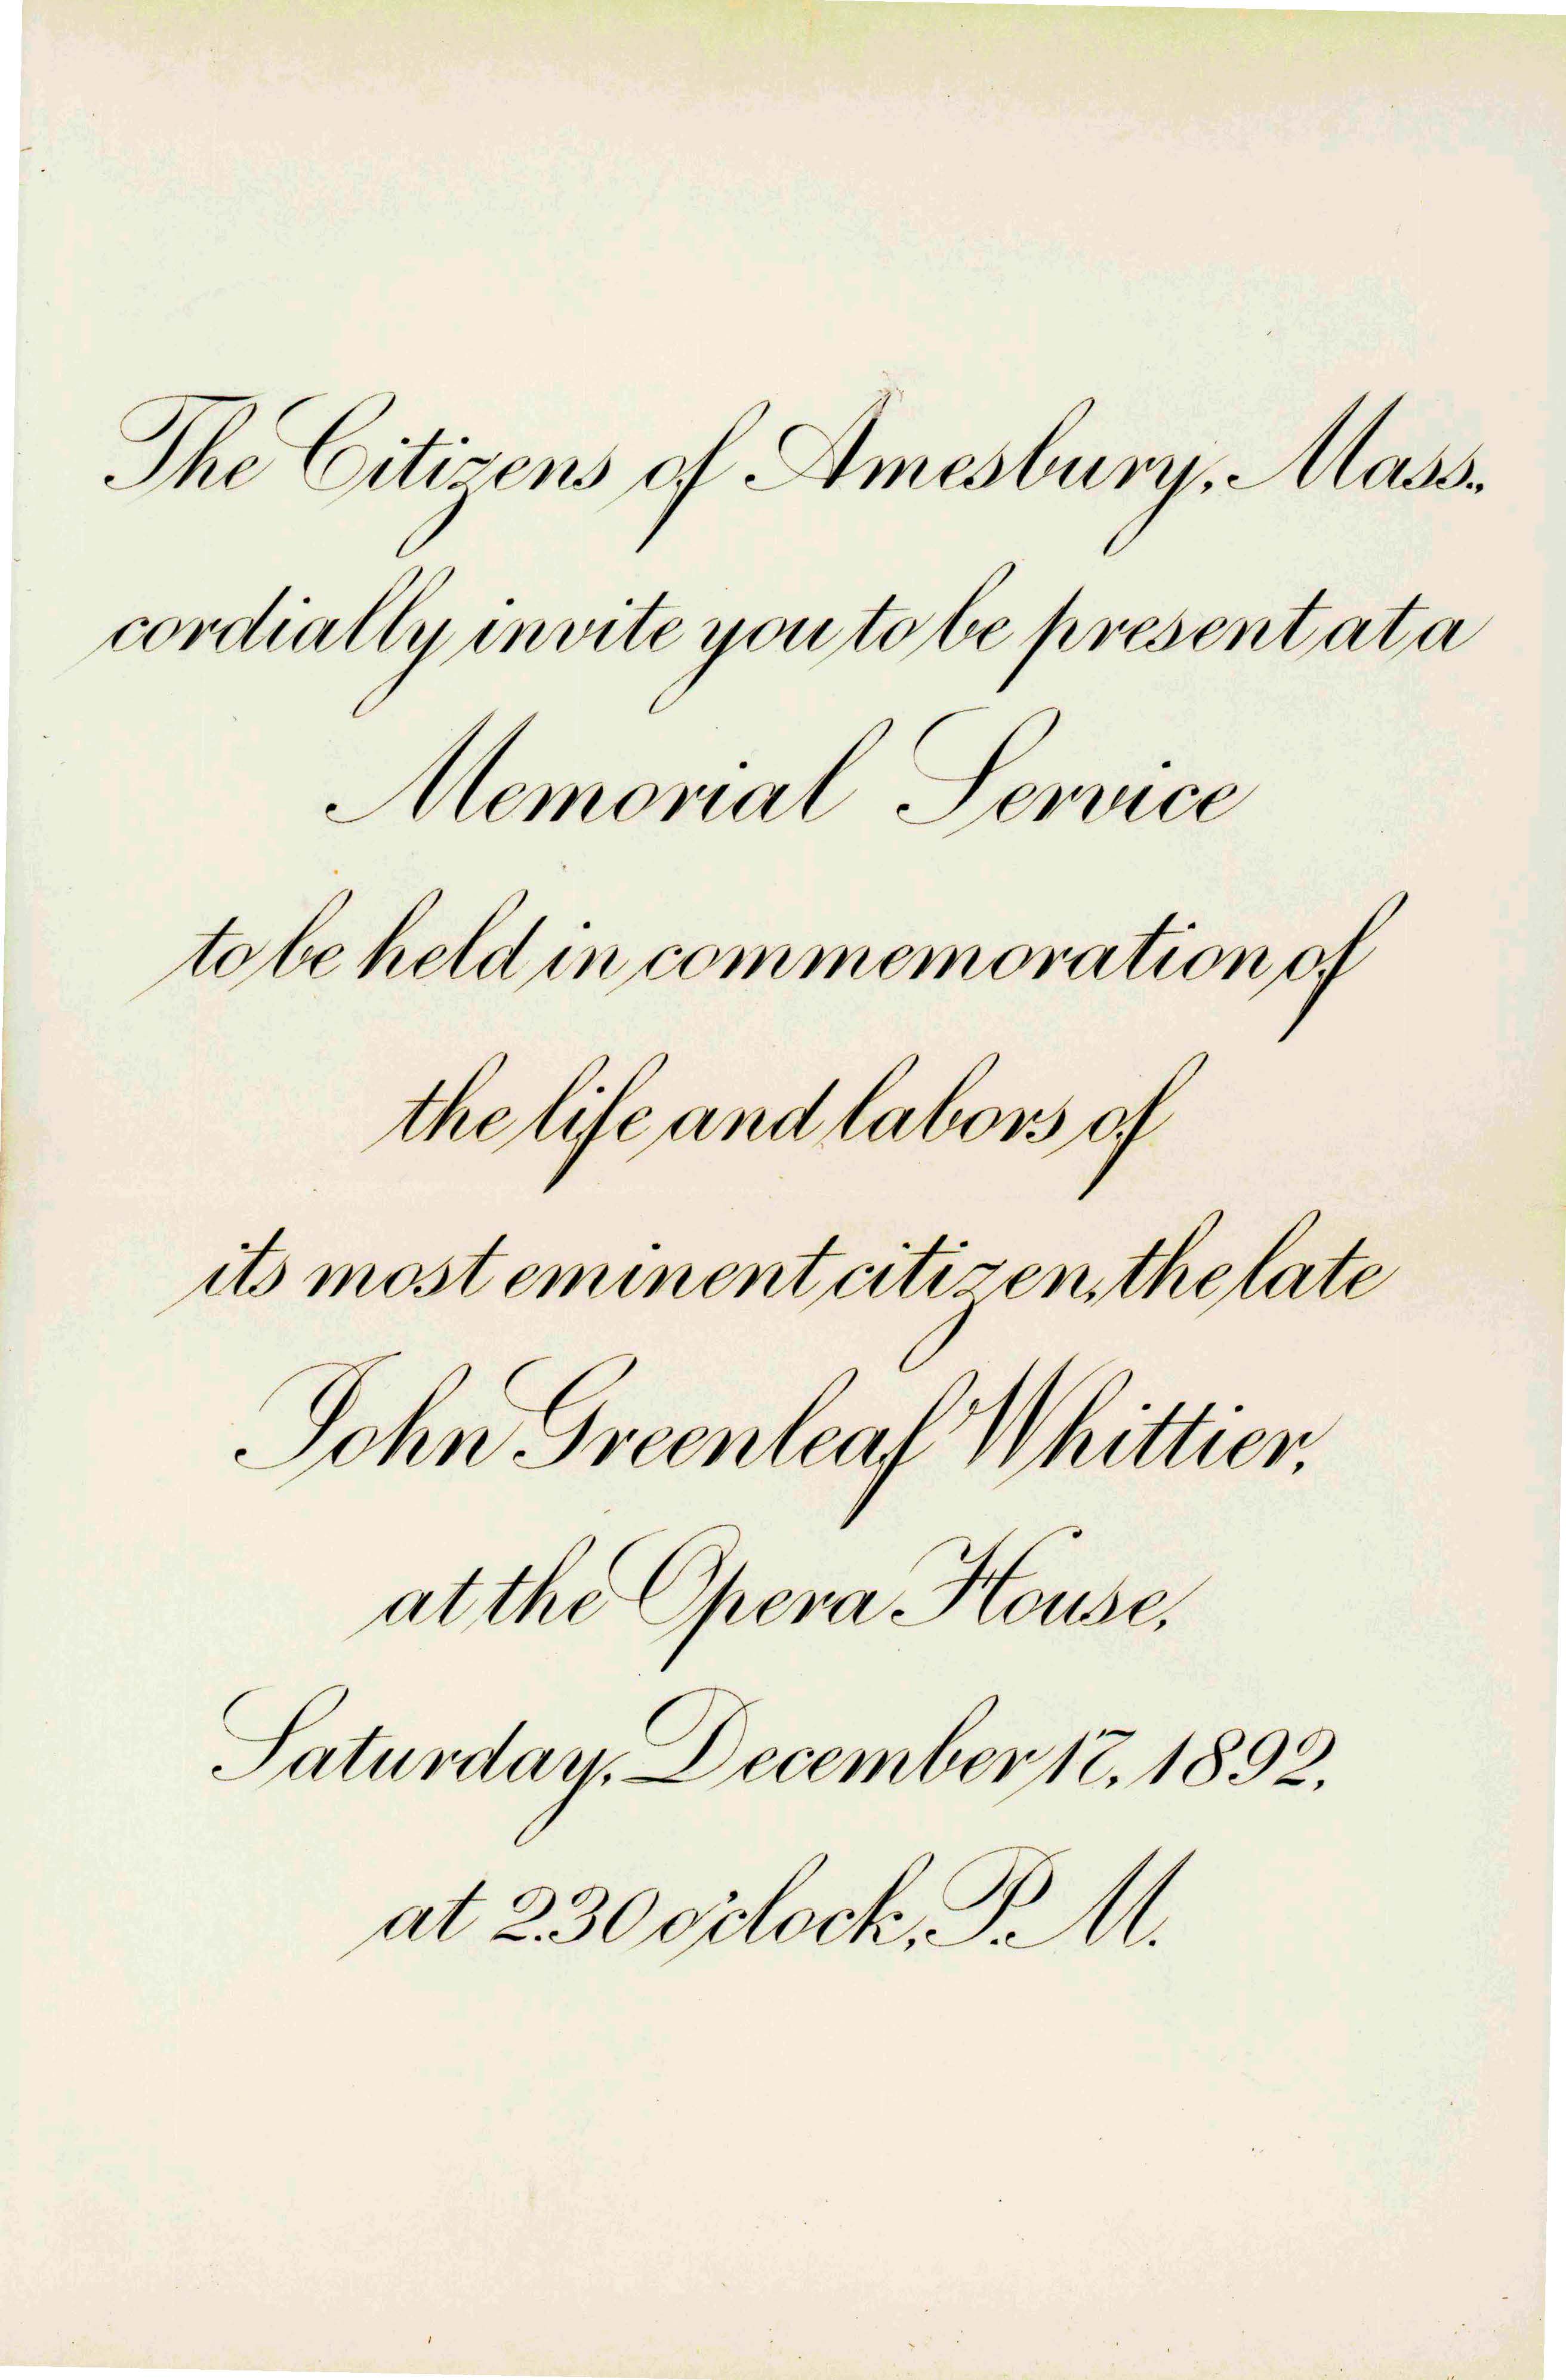 Engraved Memorial Service Invitation - Citizens of Amesbury, MA